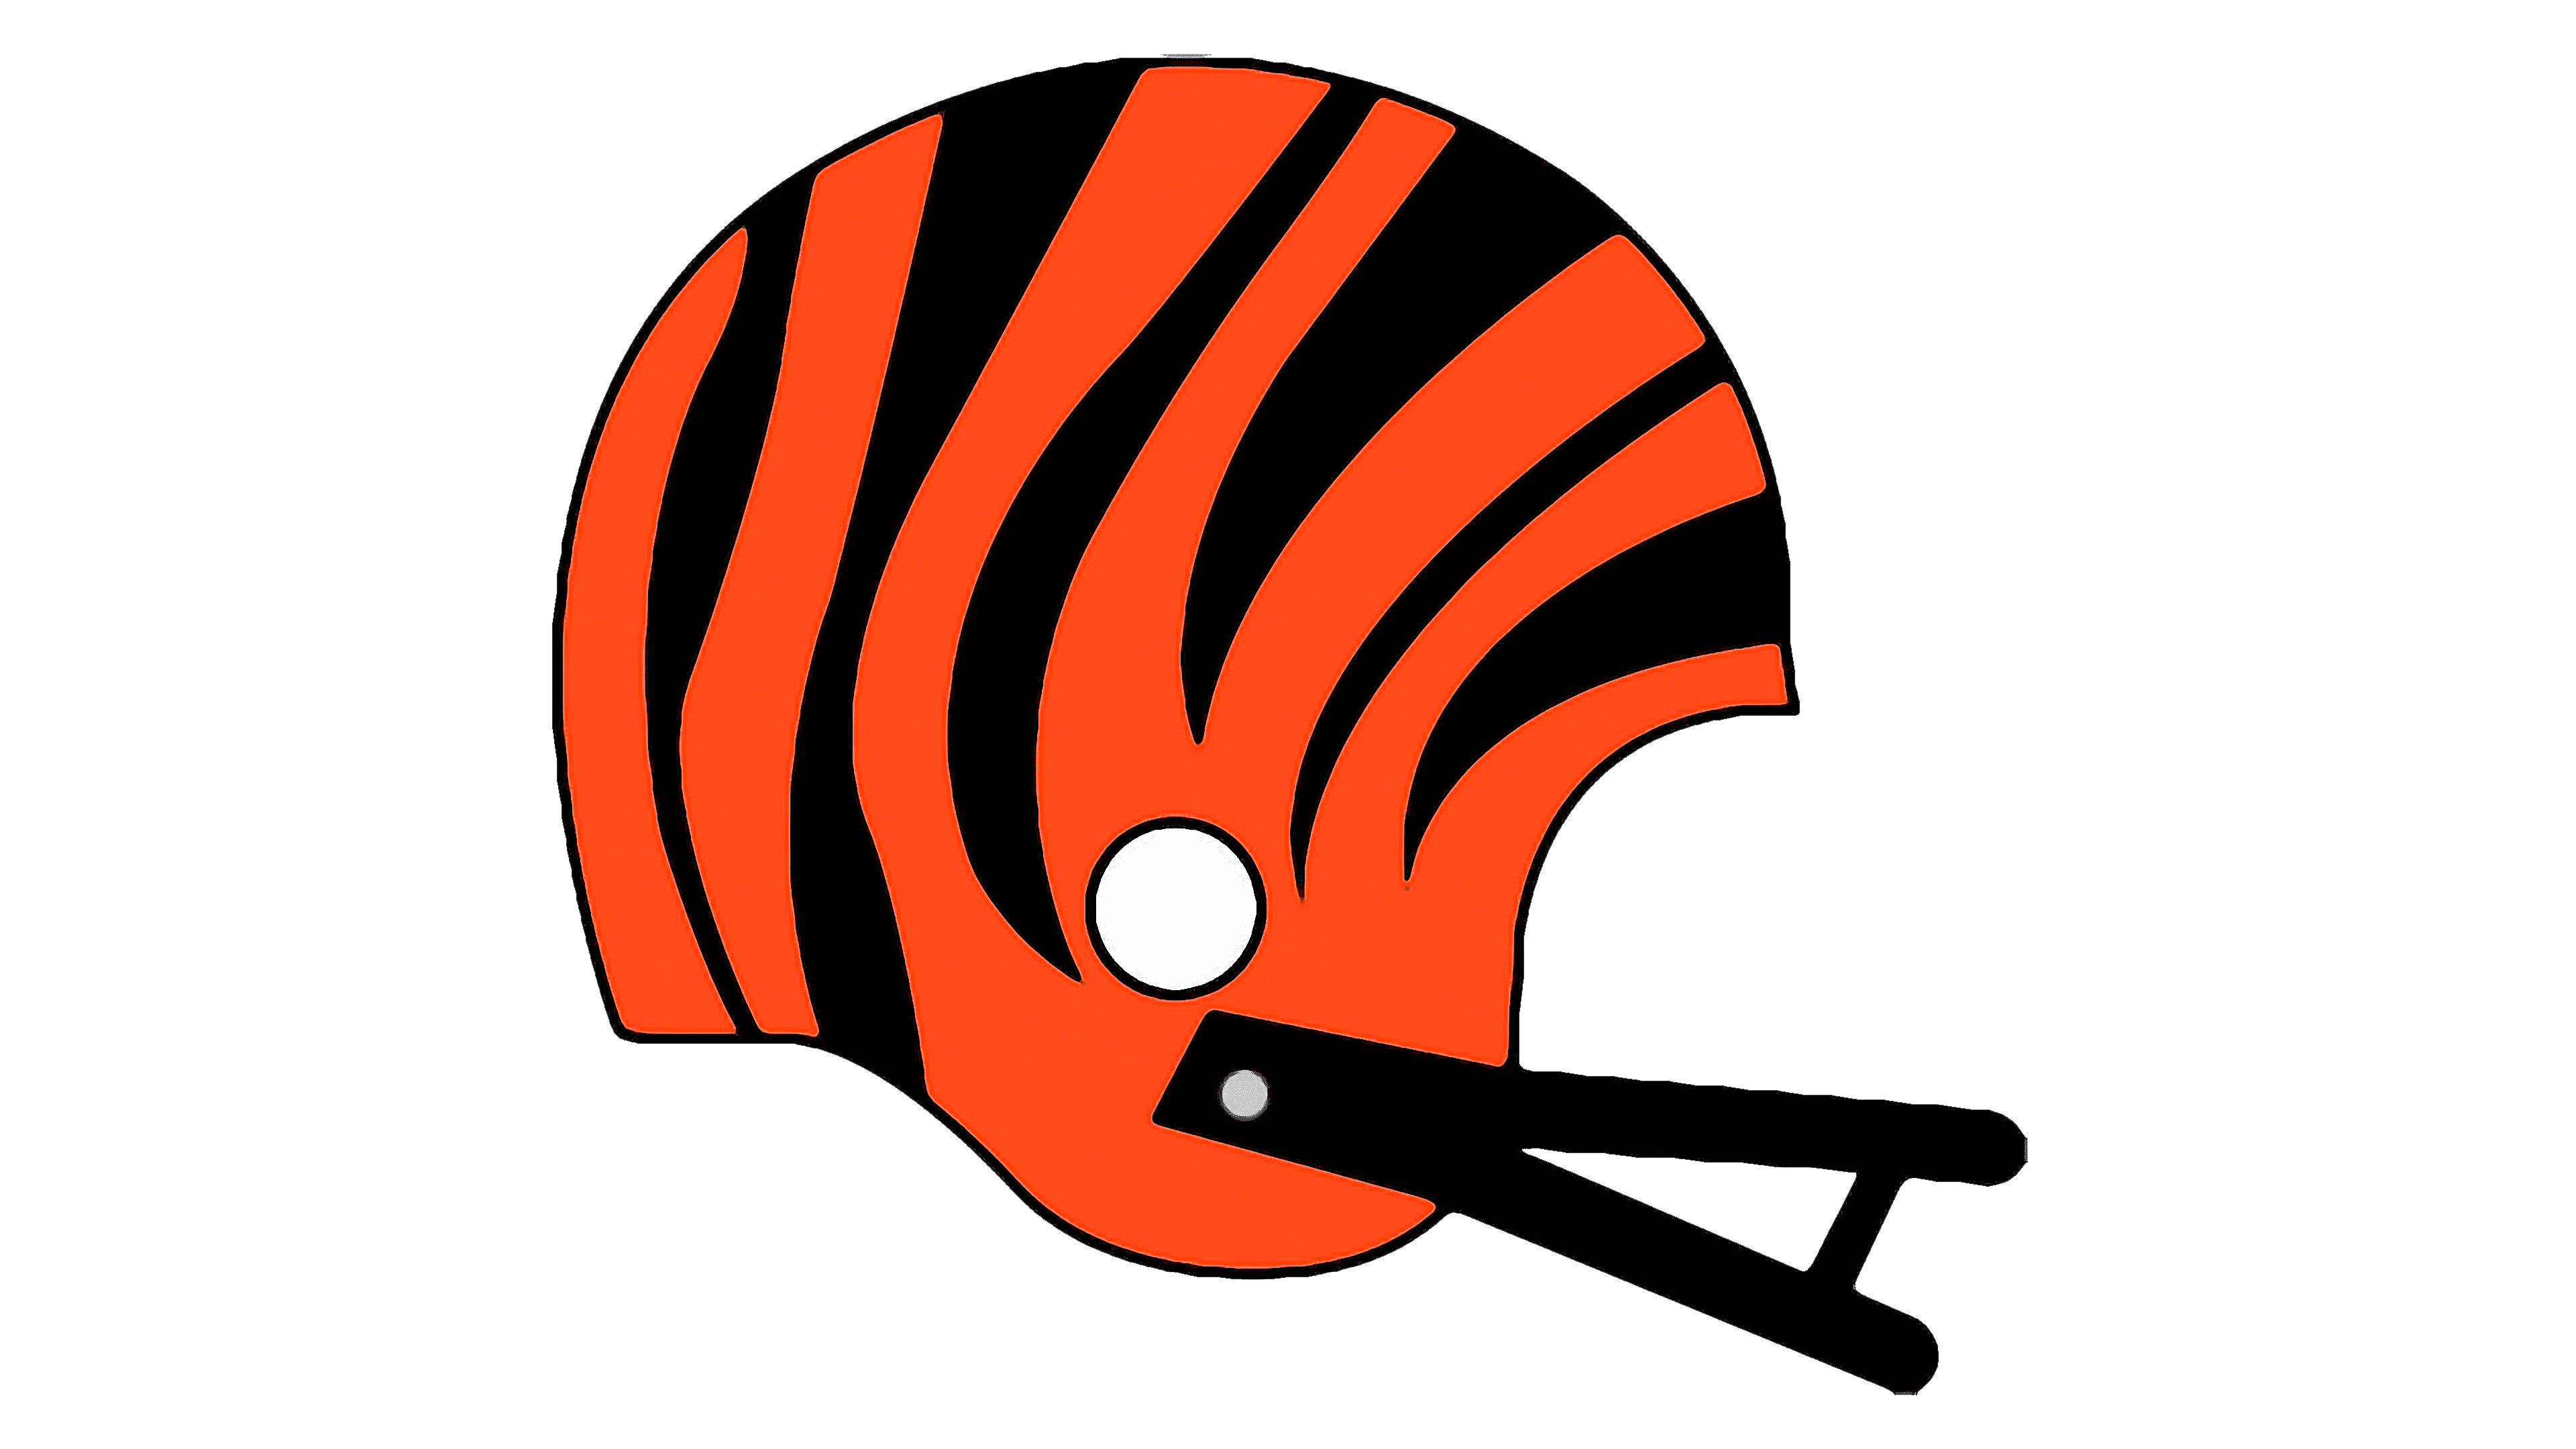 Cincinnati Bengals Logo, symbol, meaning, history, PNG, brand